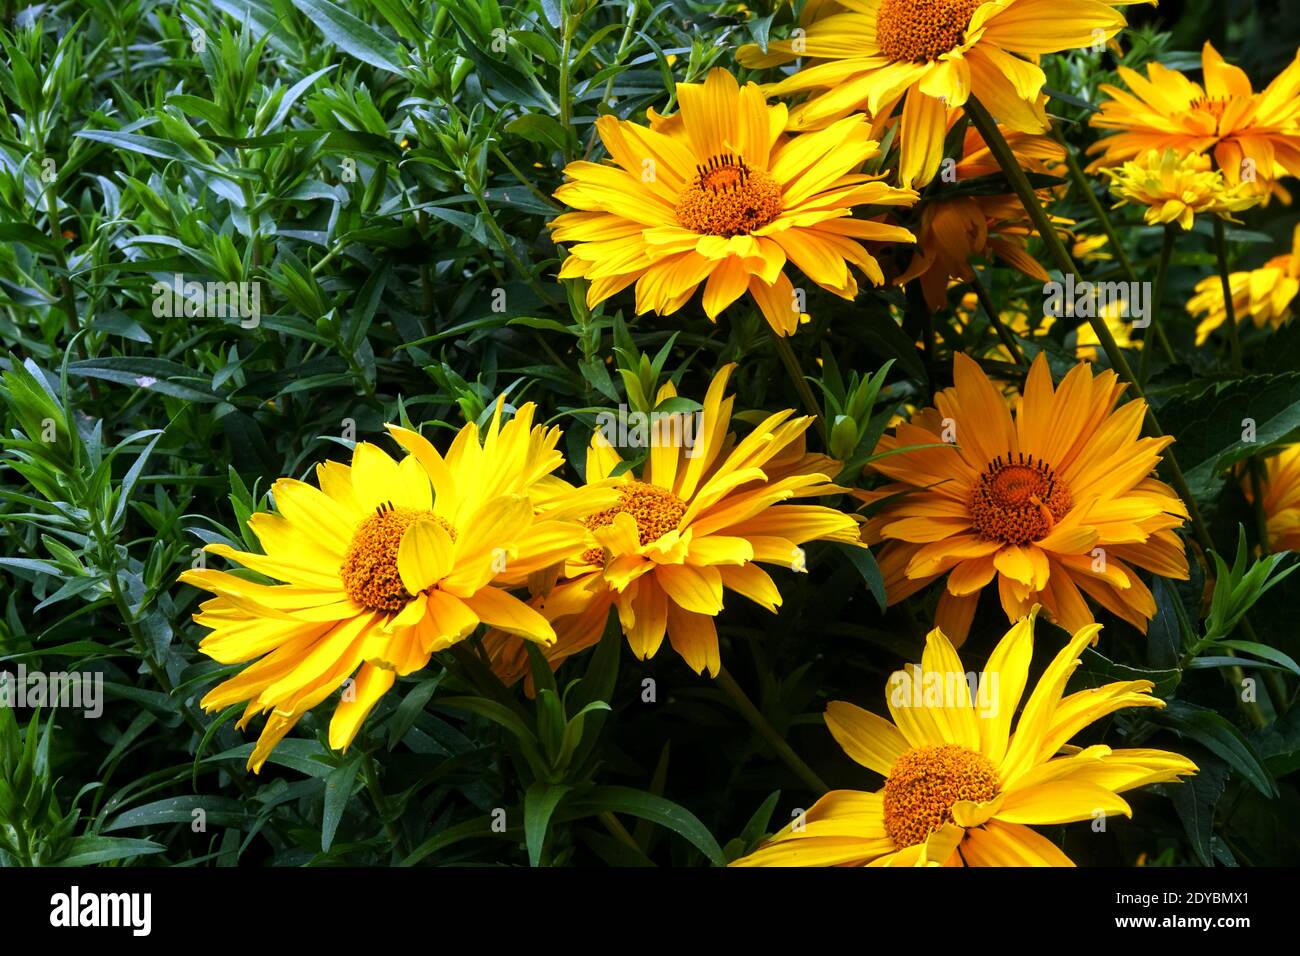 Heliopsis helianthoides Scabra 'Mars' False sunflower Stock Photo